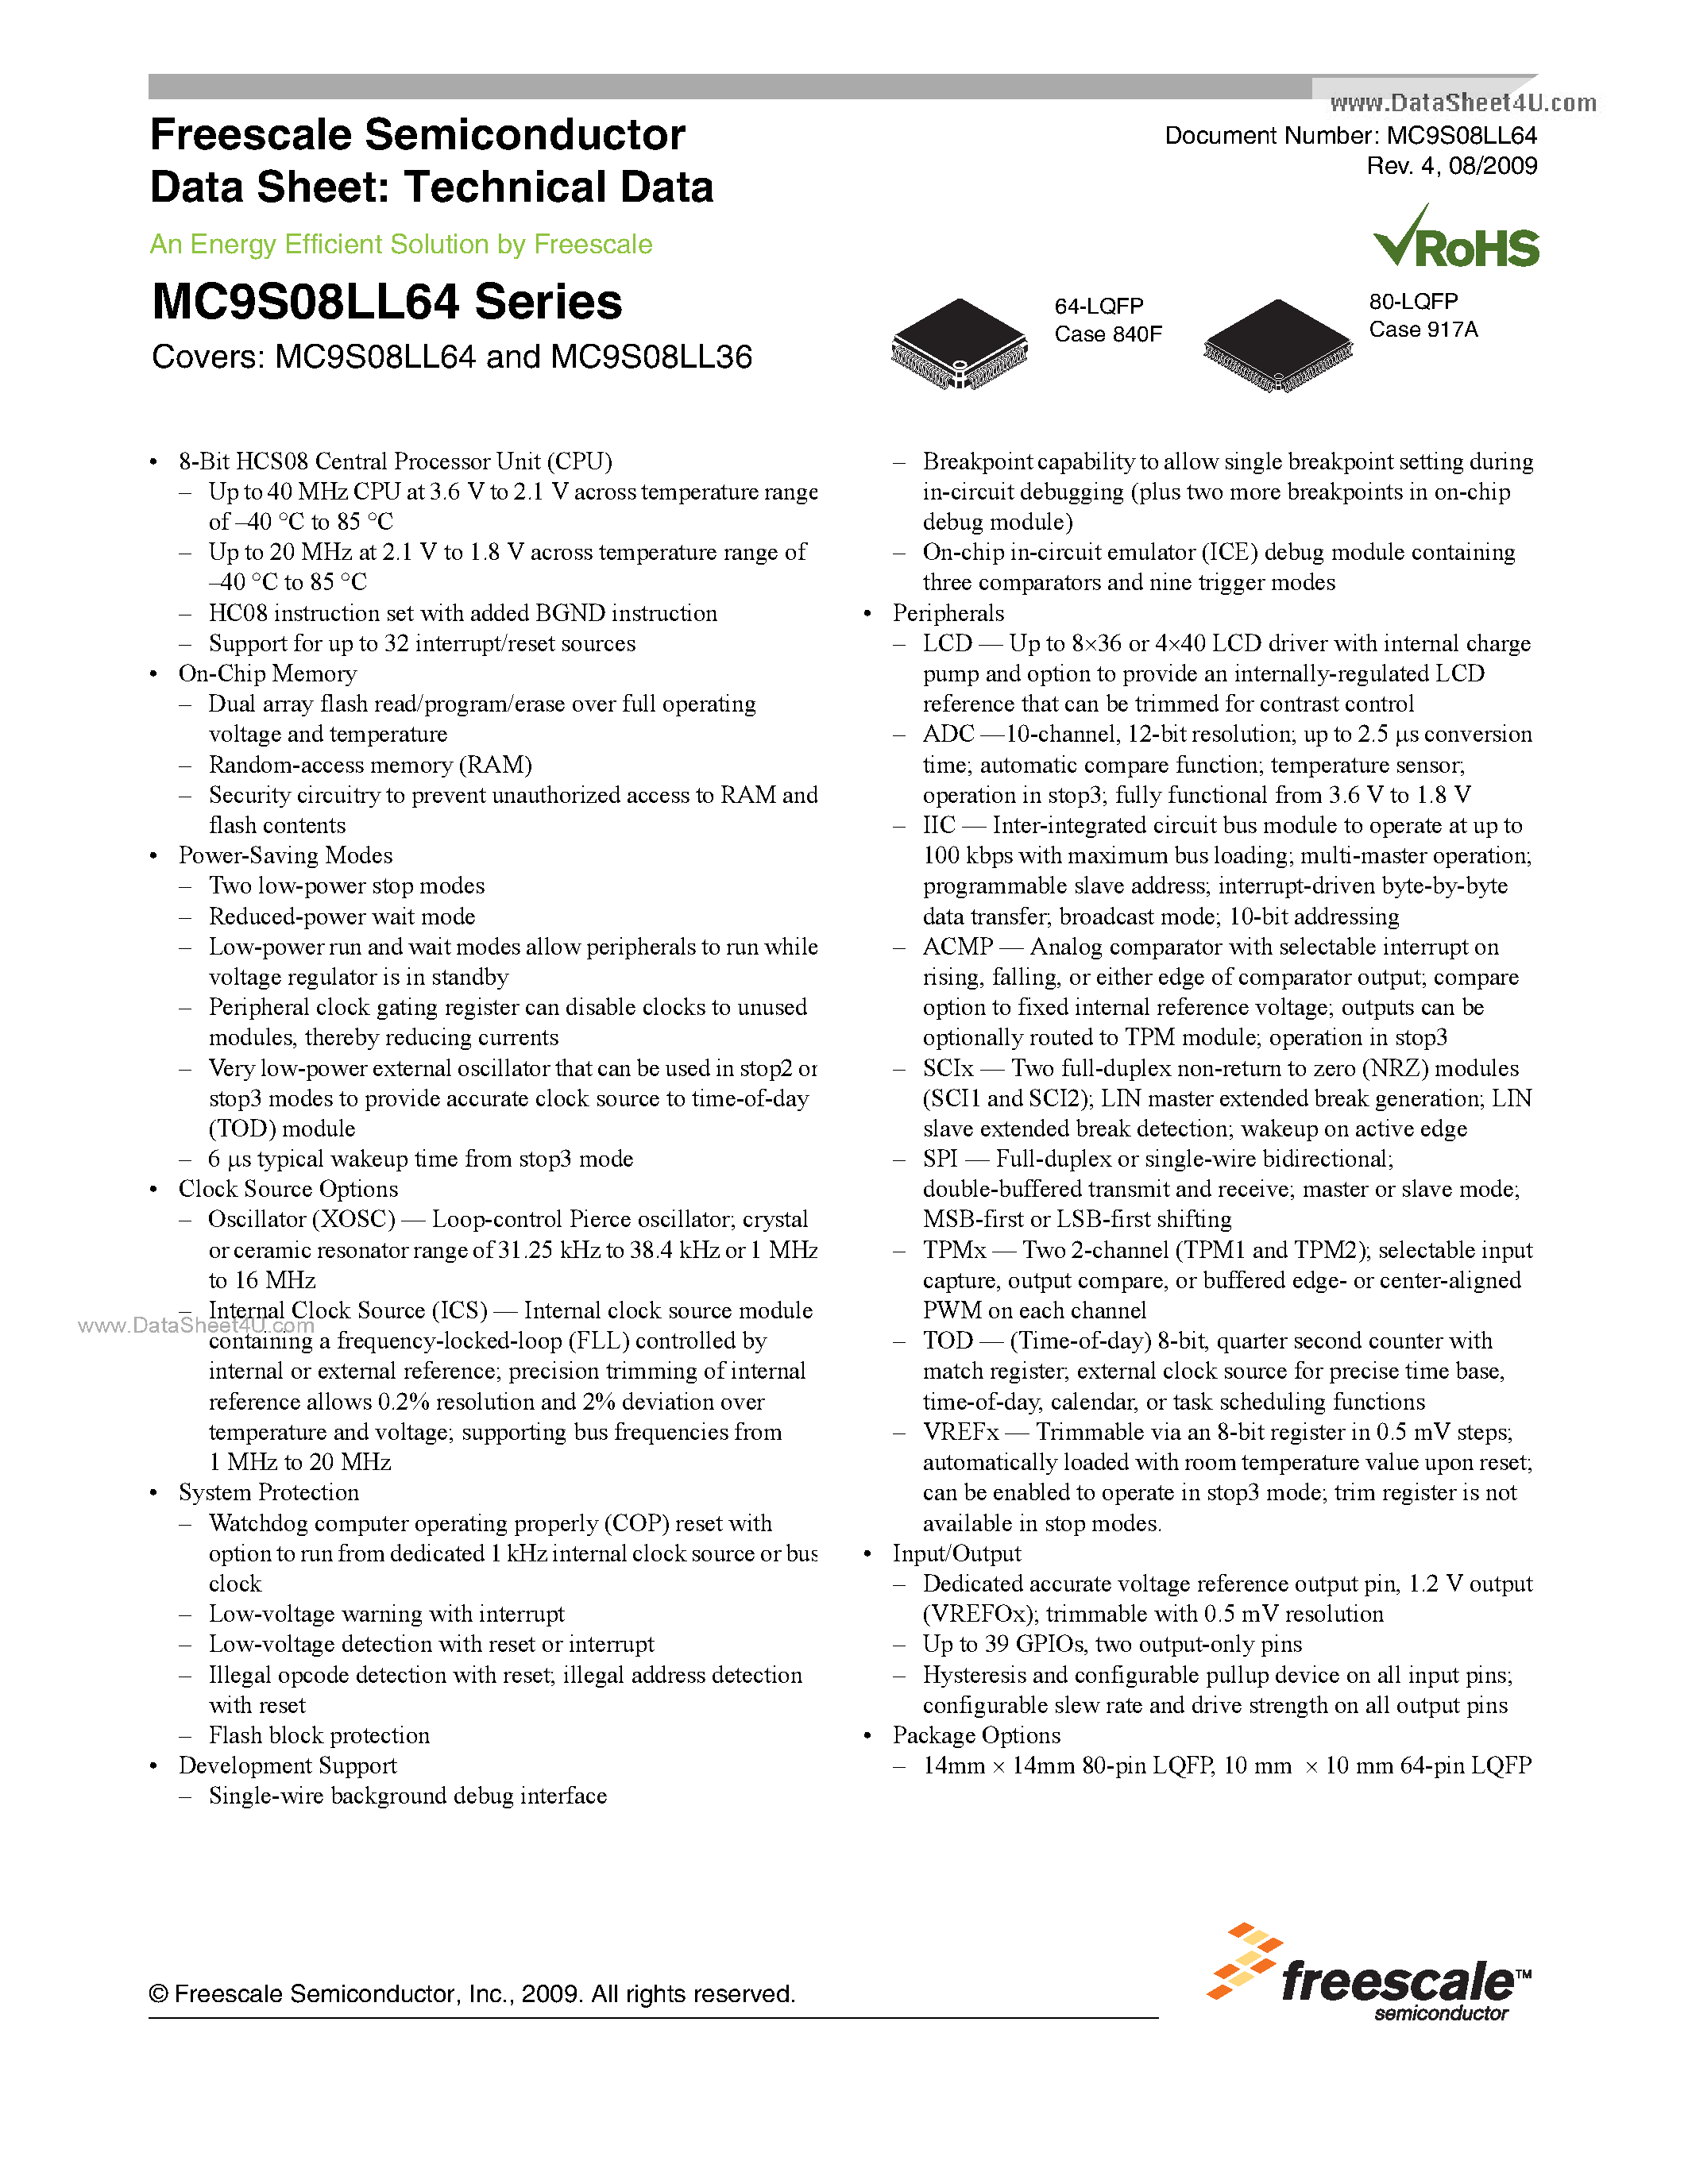 Datasheet MC9S08LL36 - (MC9S08LL36 / MC9S08LL64) 8-Bit HCS08 Central Processor Unit page 1